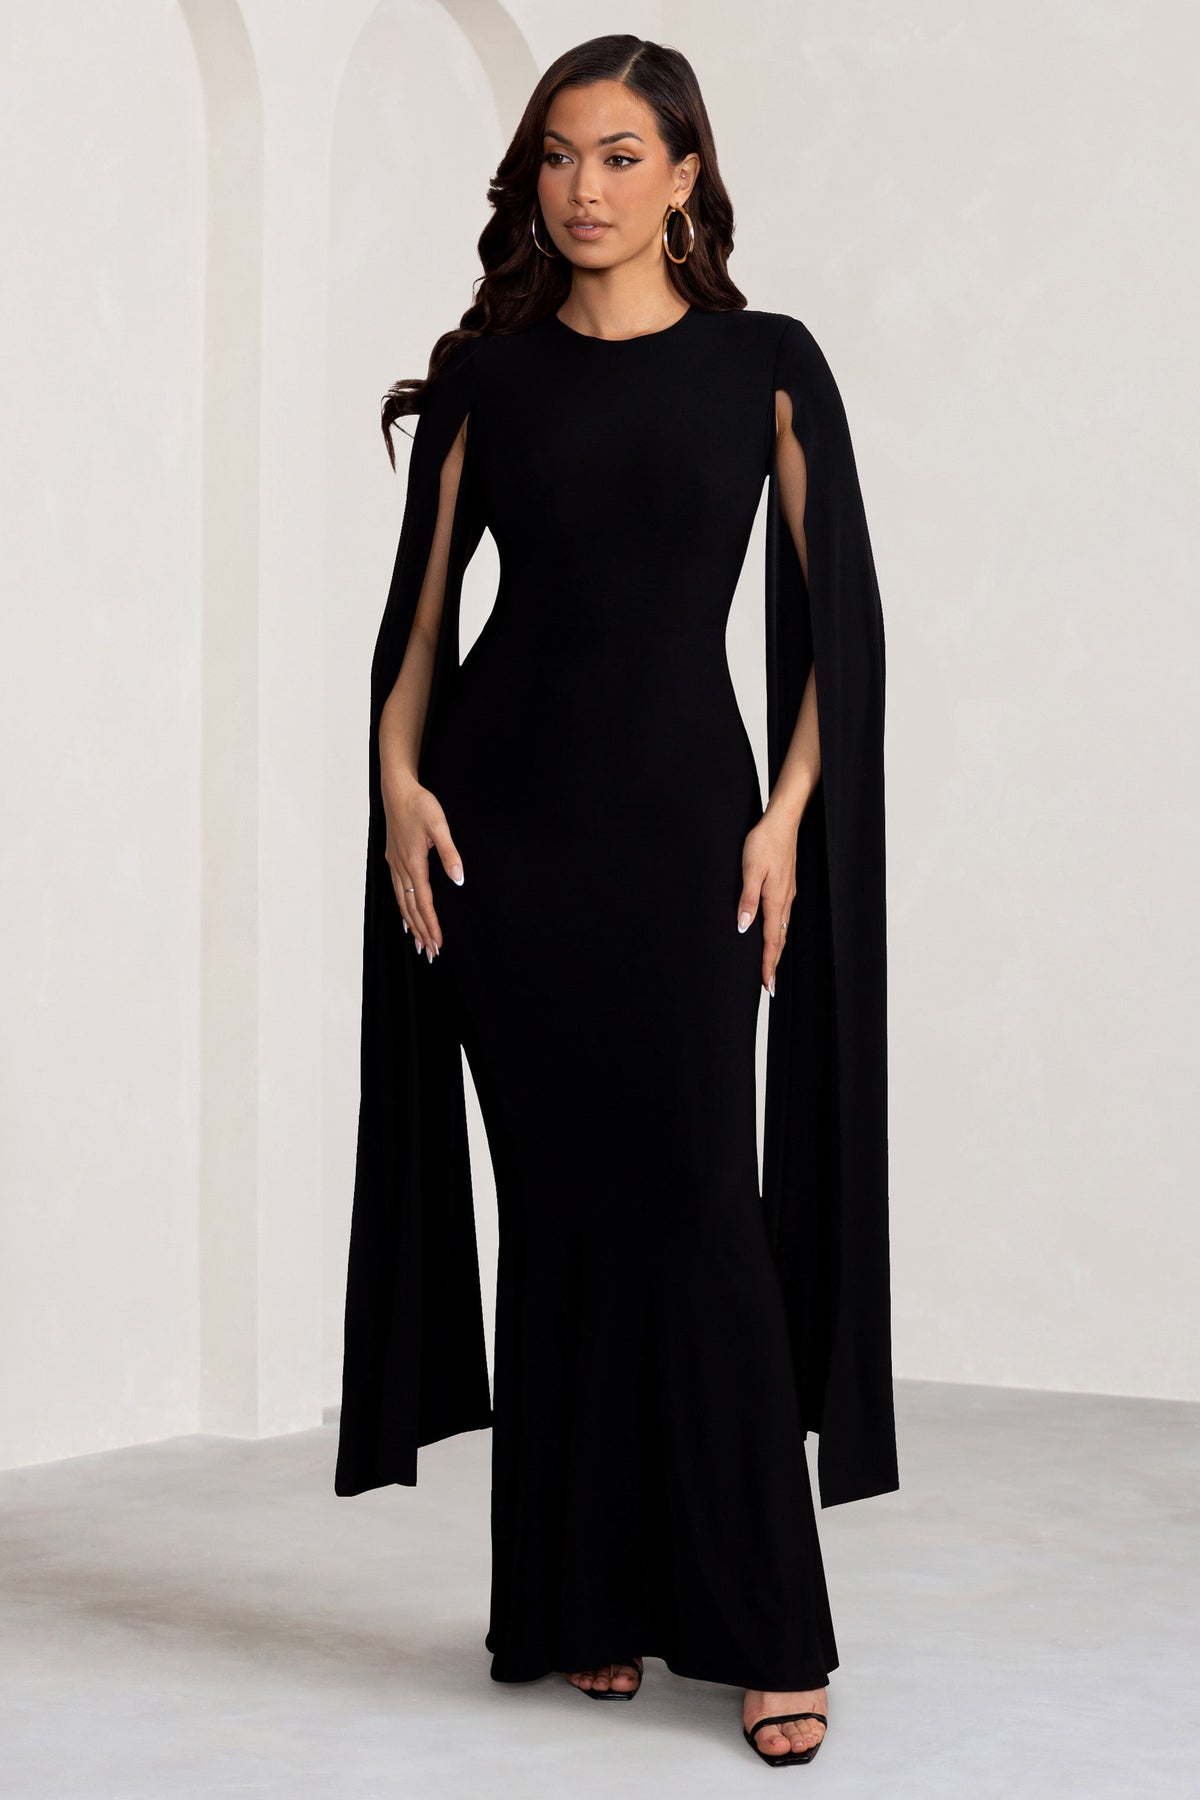 3D Floral One Shoulder Cape Gown by Amelia Couture 388 – ABC Fashion